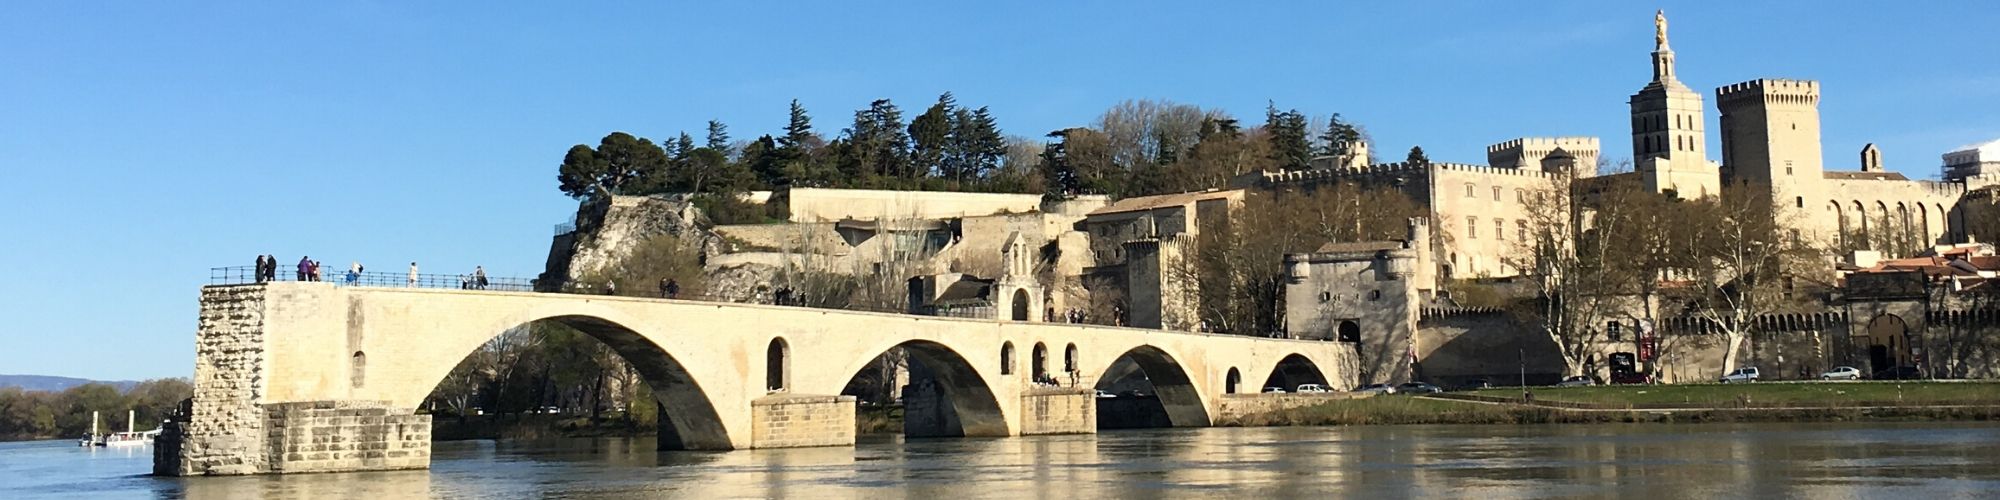 The Bridge of Avignon